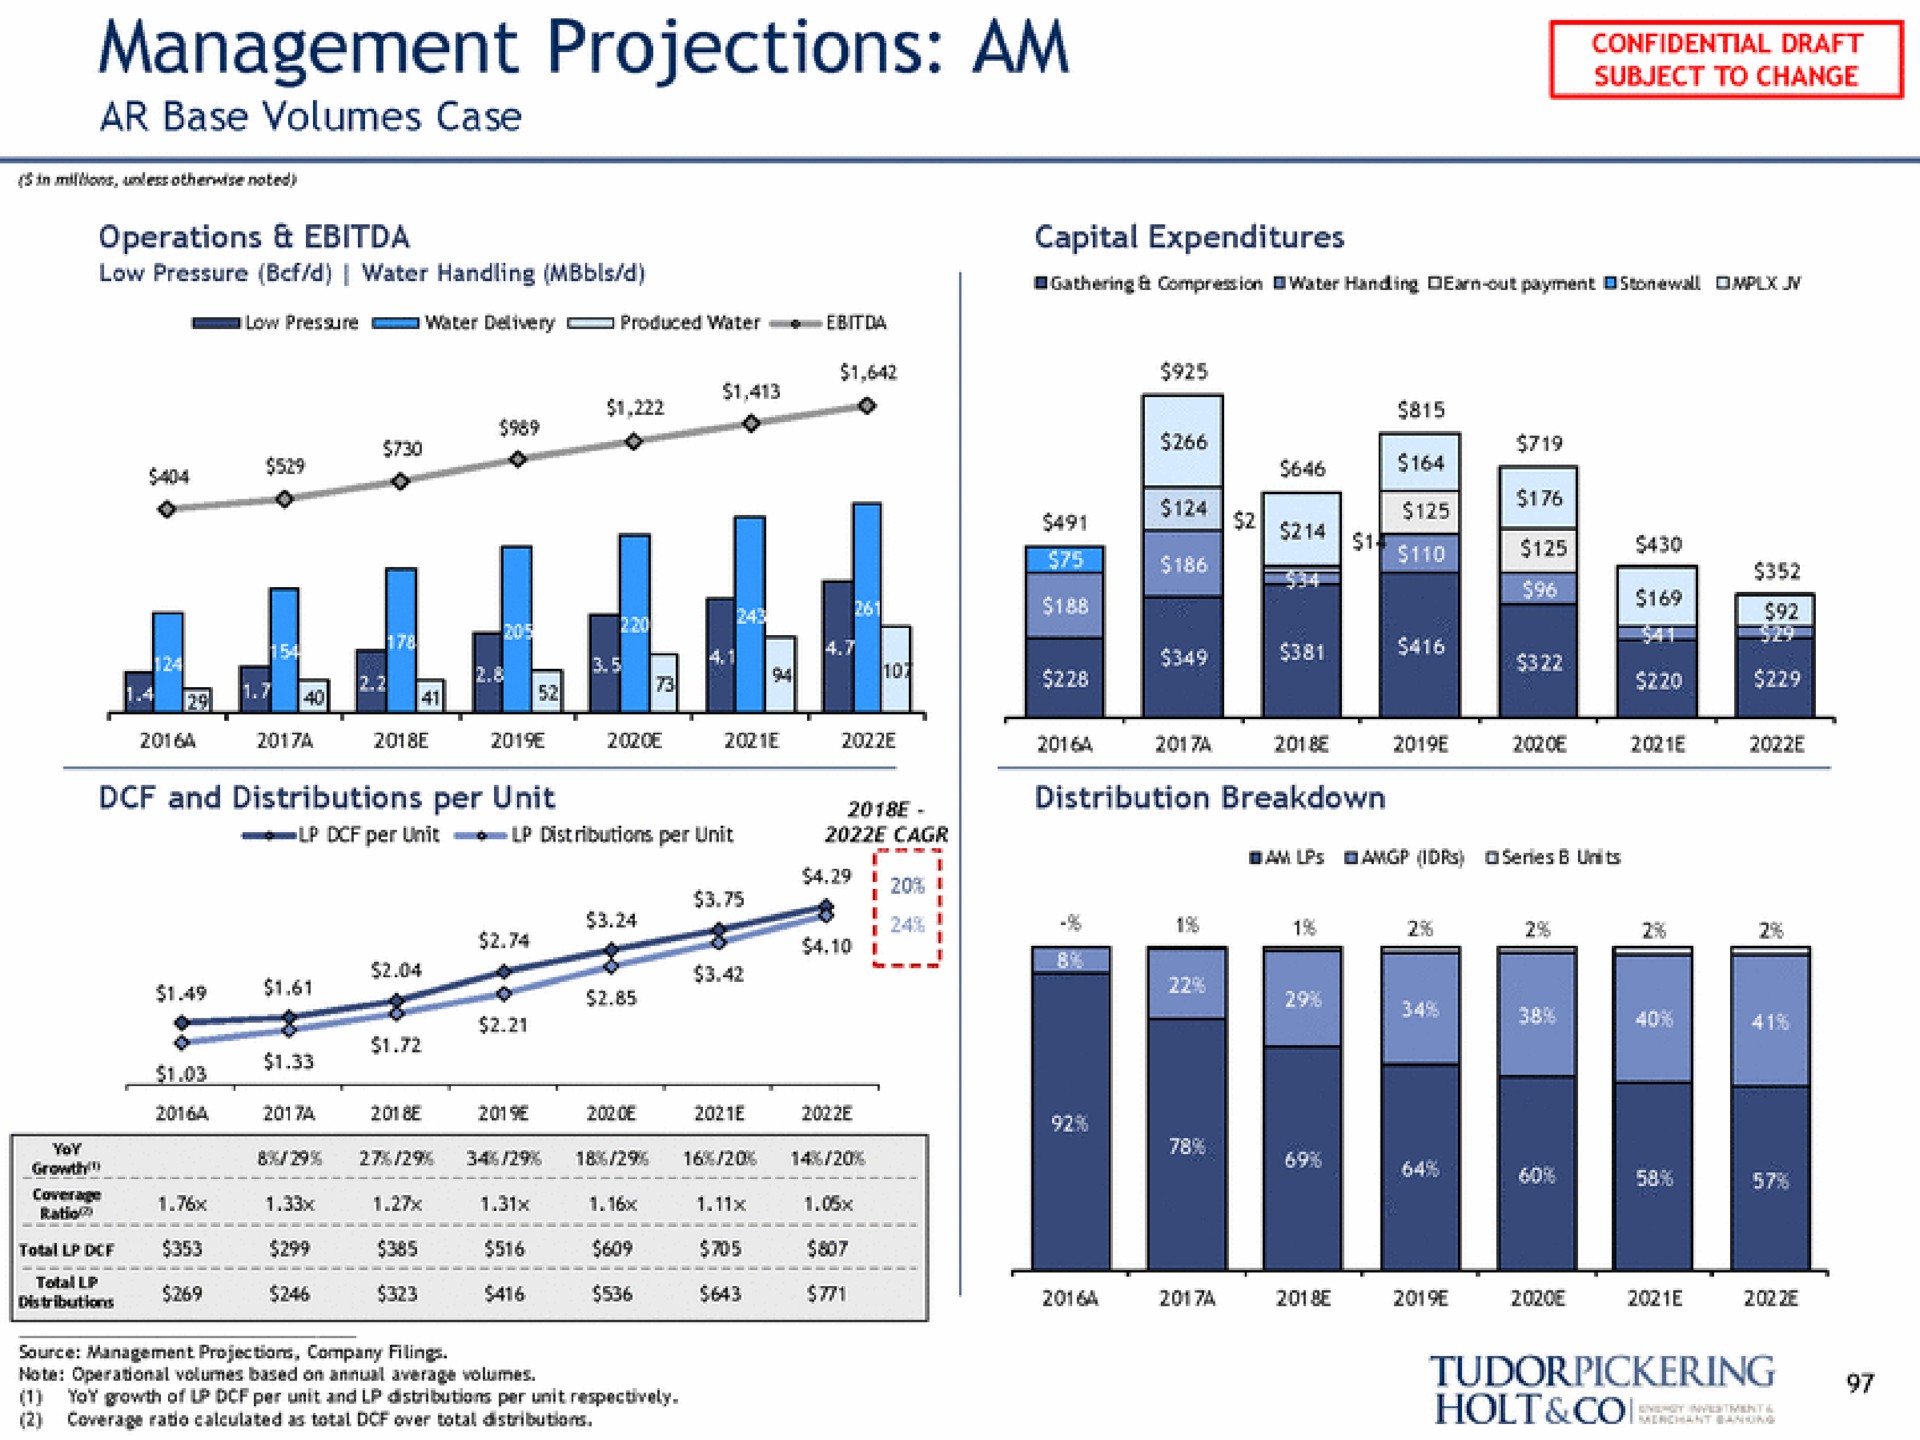 management projections am base volumes case ree | Tudor, Pickering, Holt & Co